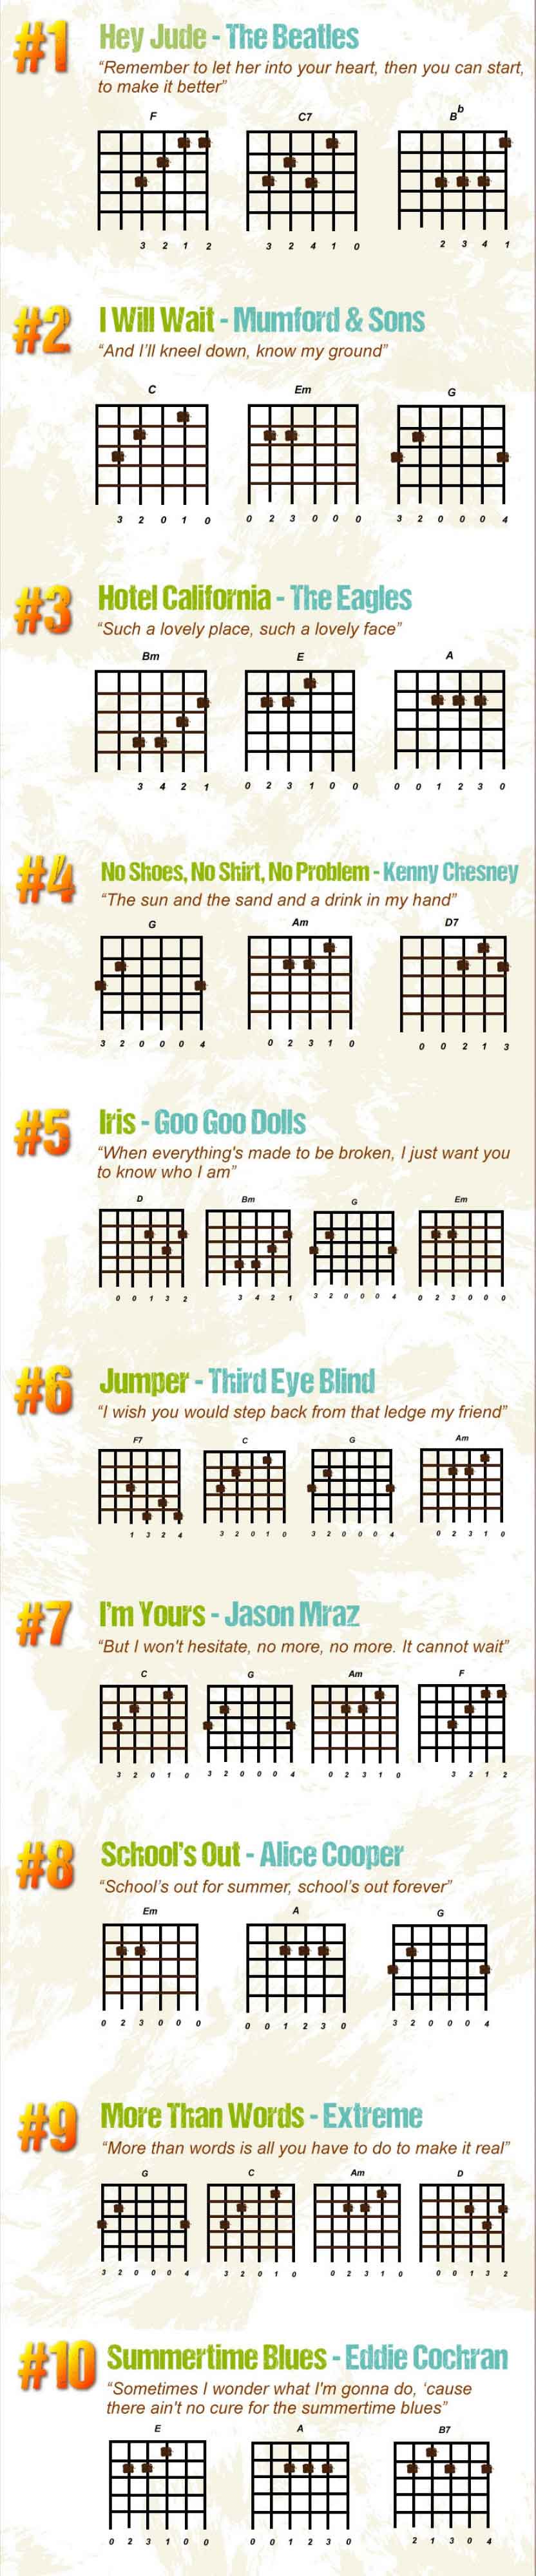 Jumper by Third Eye Blind - Guitar Tab - Guitar Instructor